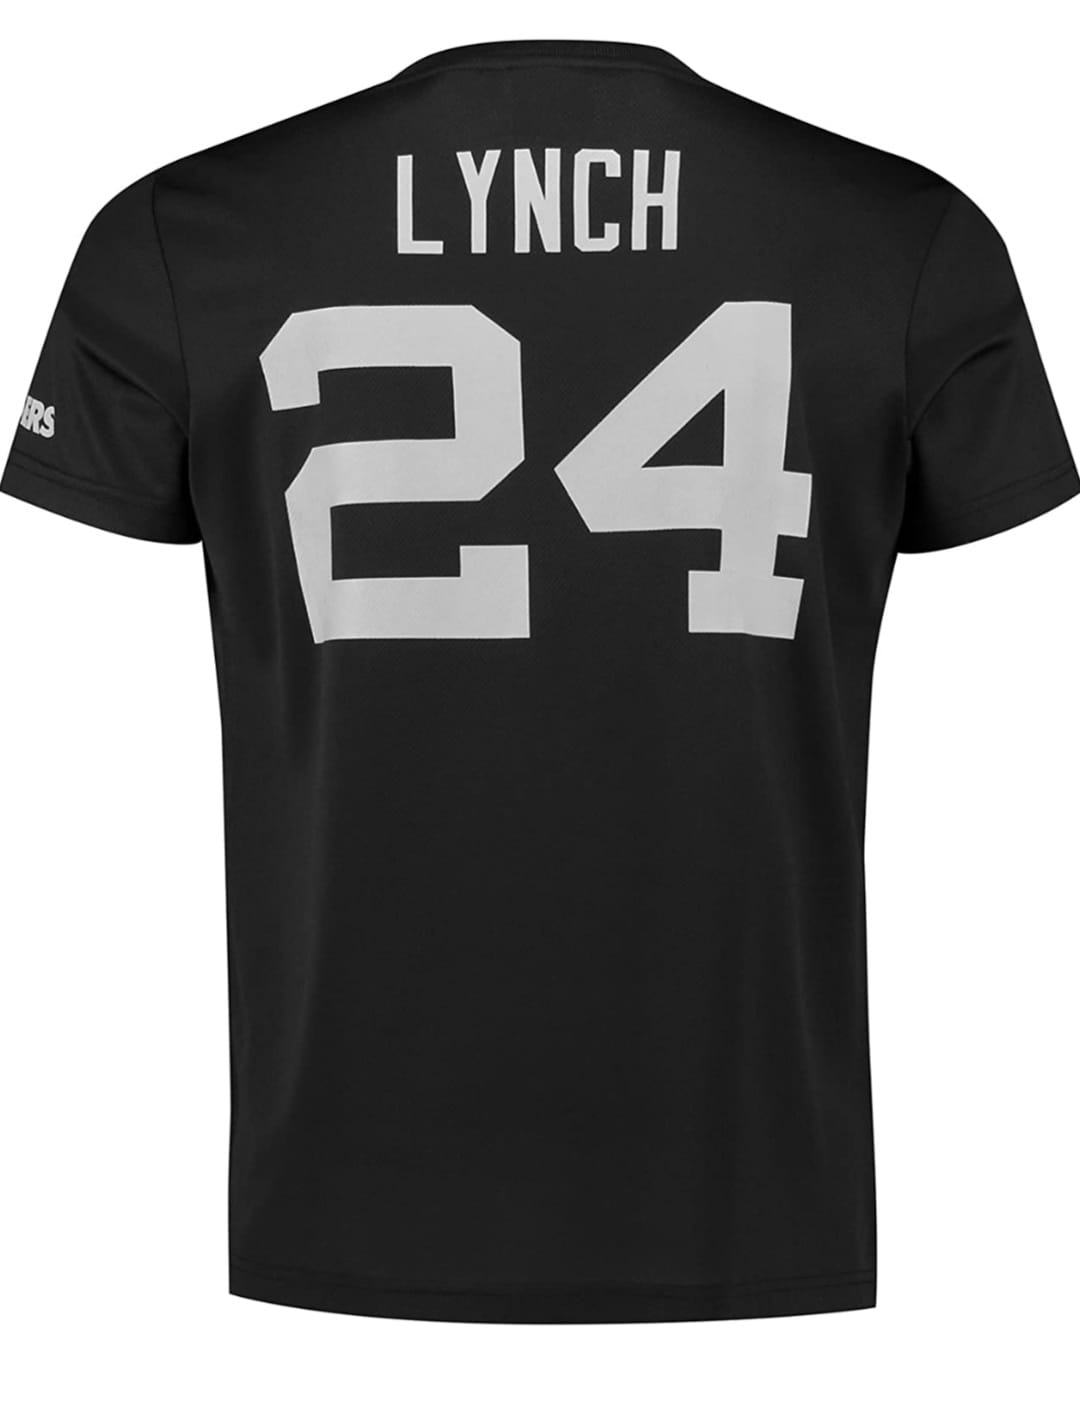 Футболка NFL Oakland Raiders # 24 Lynch размер S